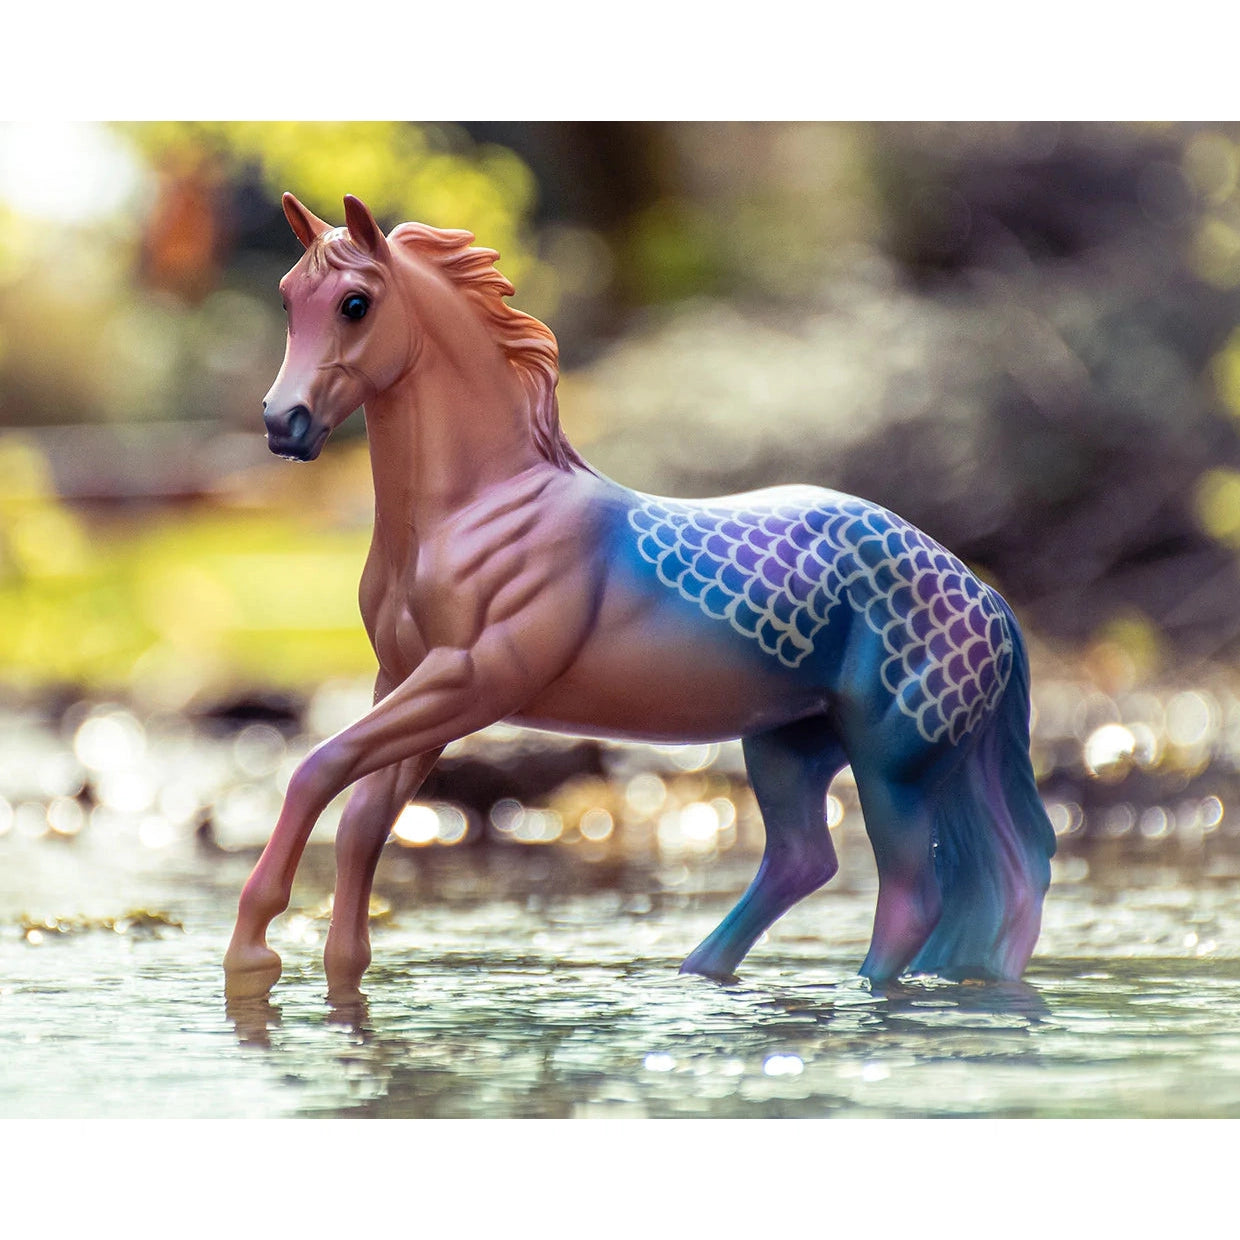 Neapolitan — breyer freedom series horse - The Toy Book